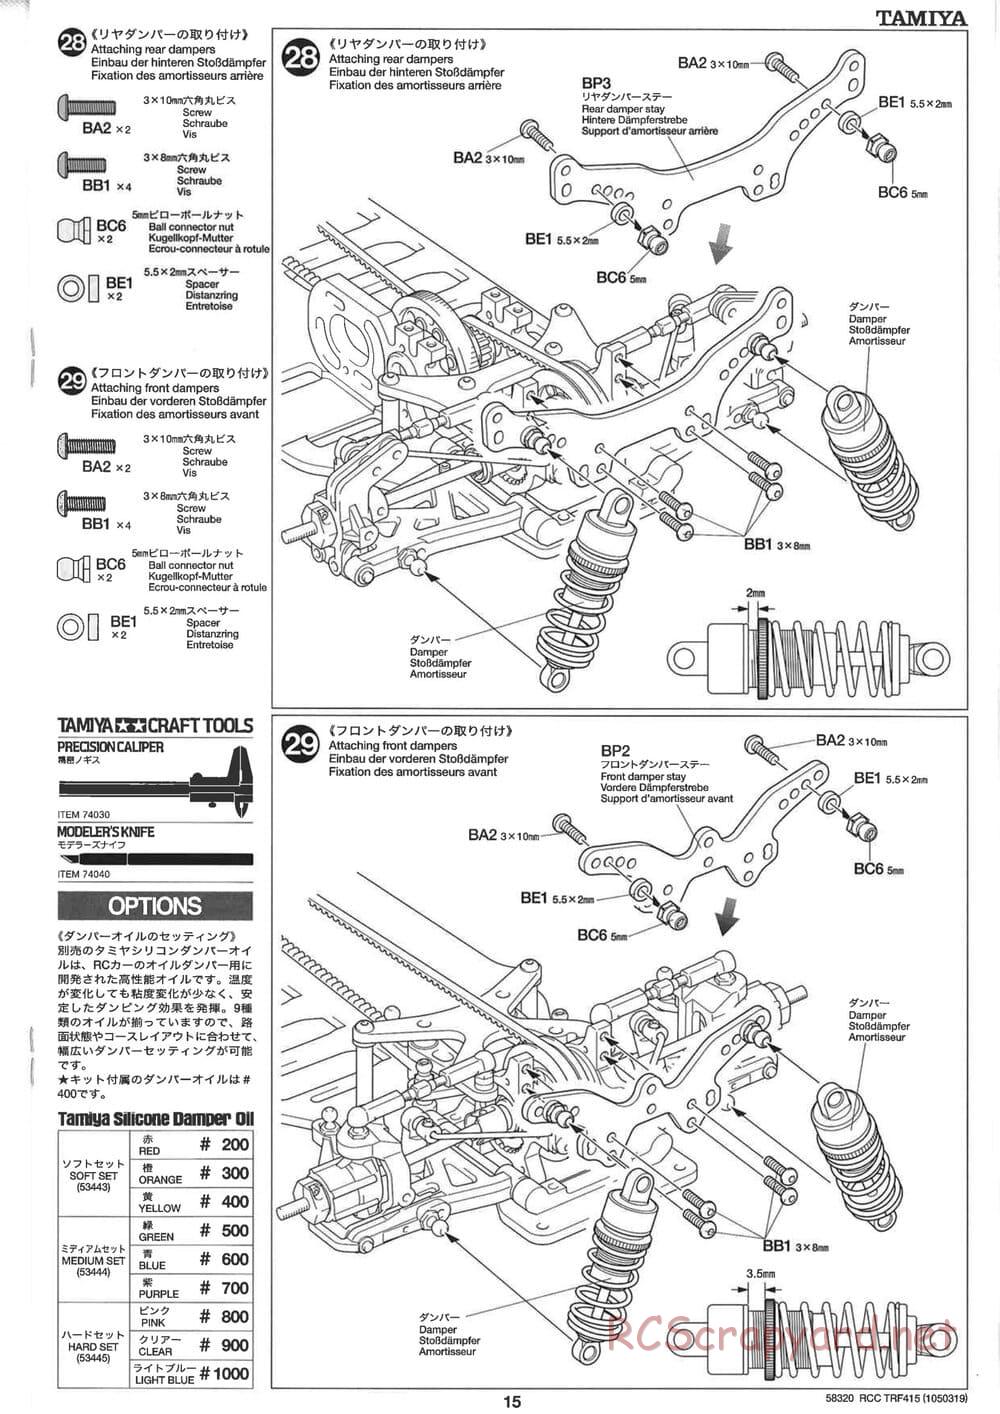 Tamiya - TRF415 Chassis - Manual - Page 15